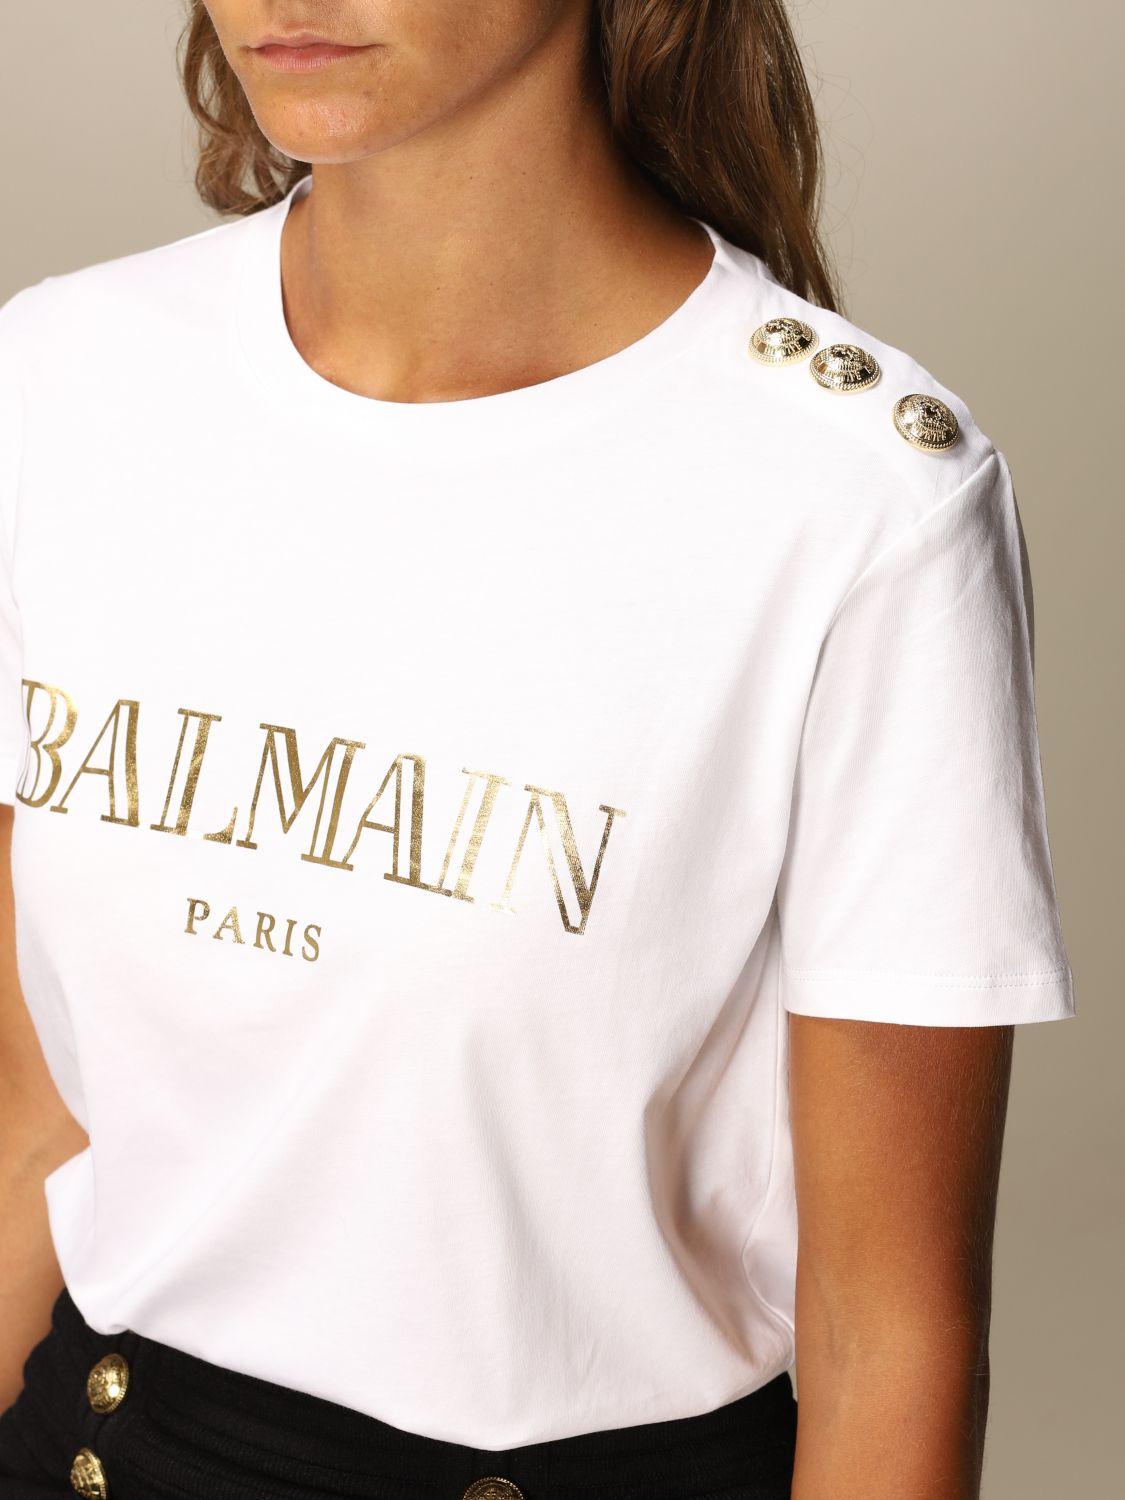 Balmain T-shirt in White - Lyst